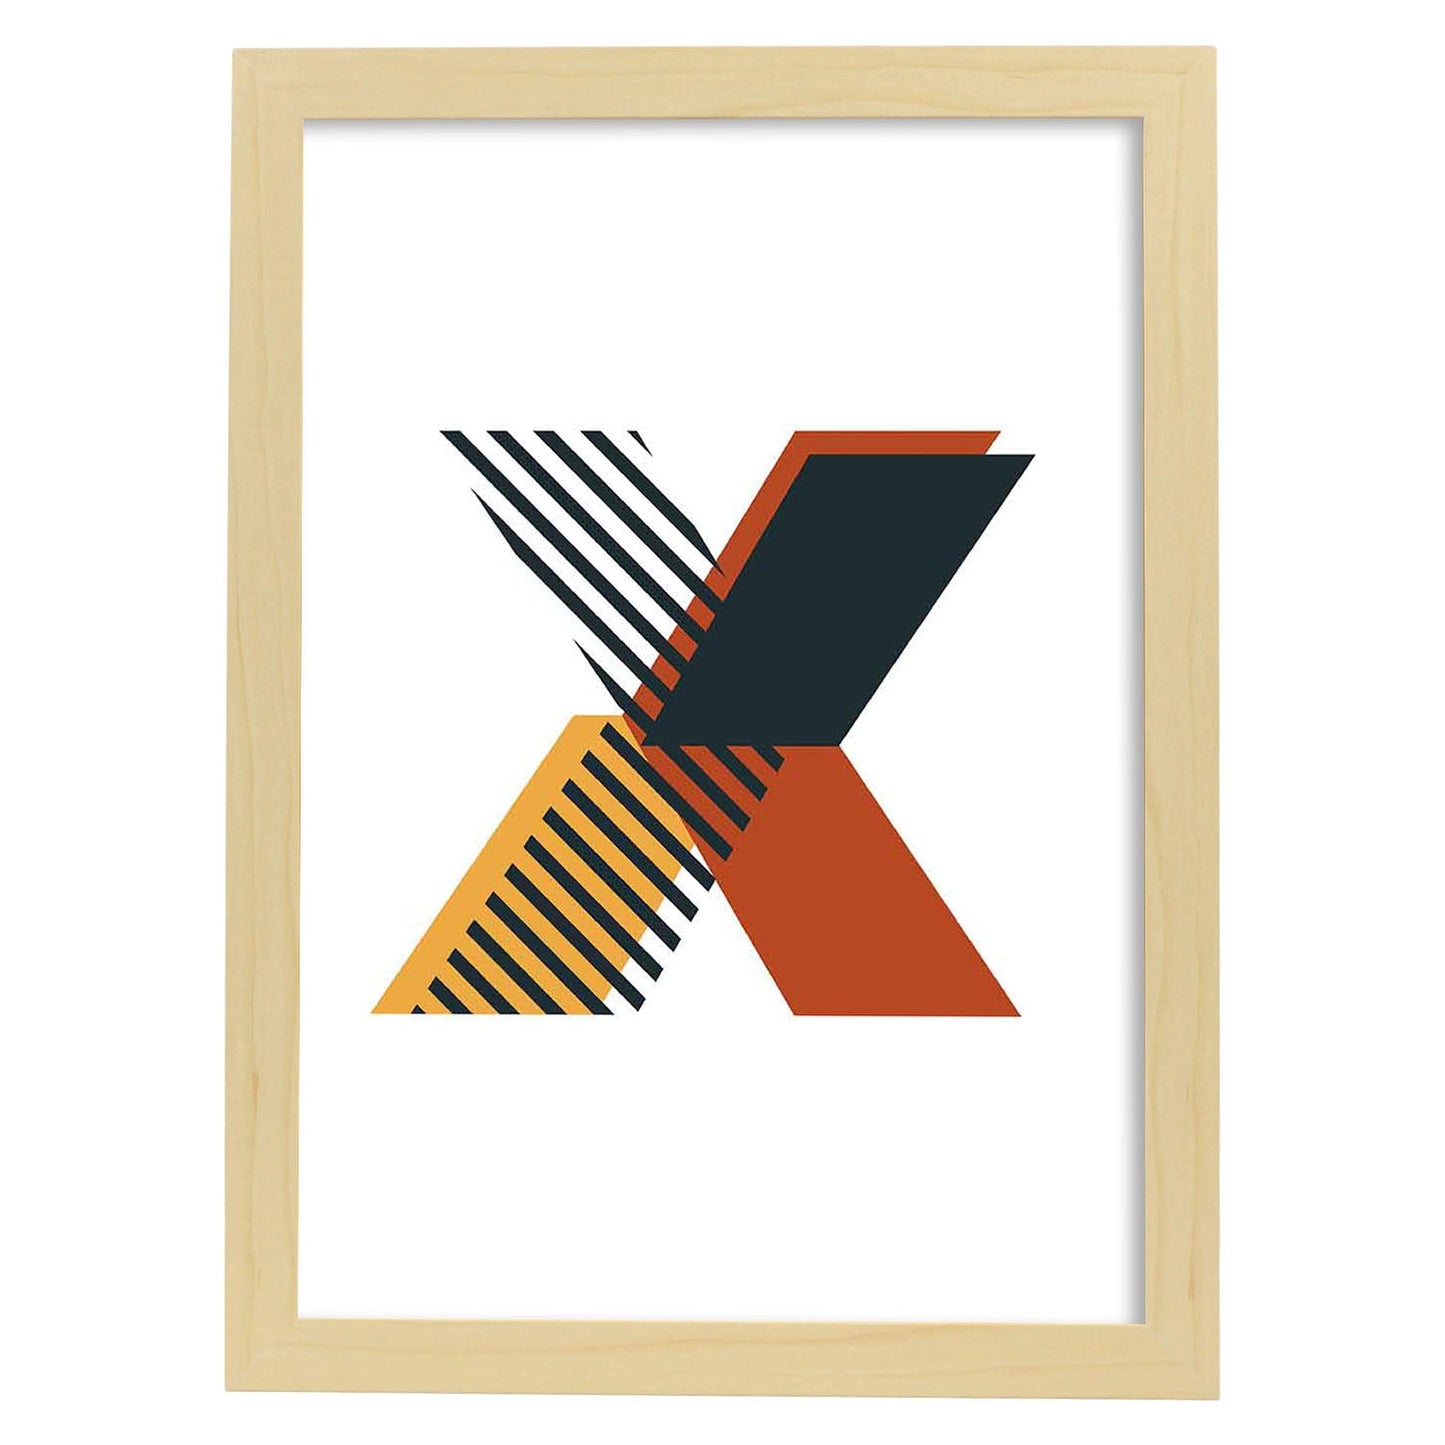 Poster de letra X. Lámina estilo Geometria con imágenes del alfabeto.-Artwork-Nacnic-A4-Marco Madera clara-Nacnic Estudio SL